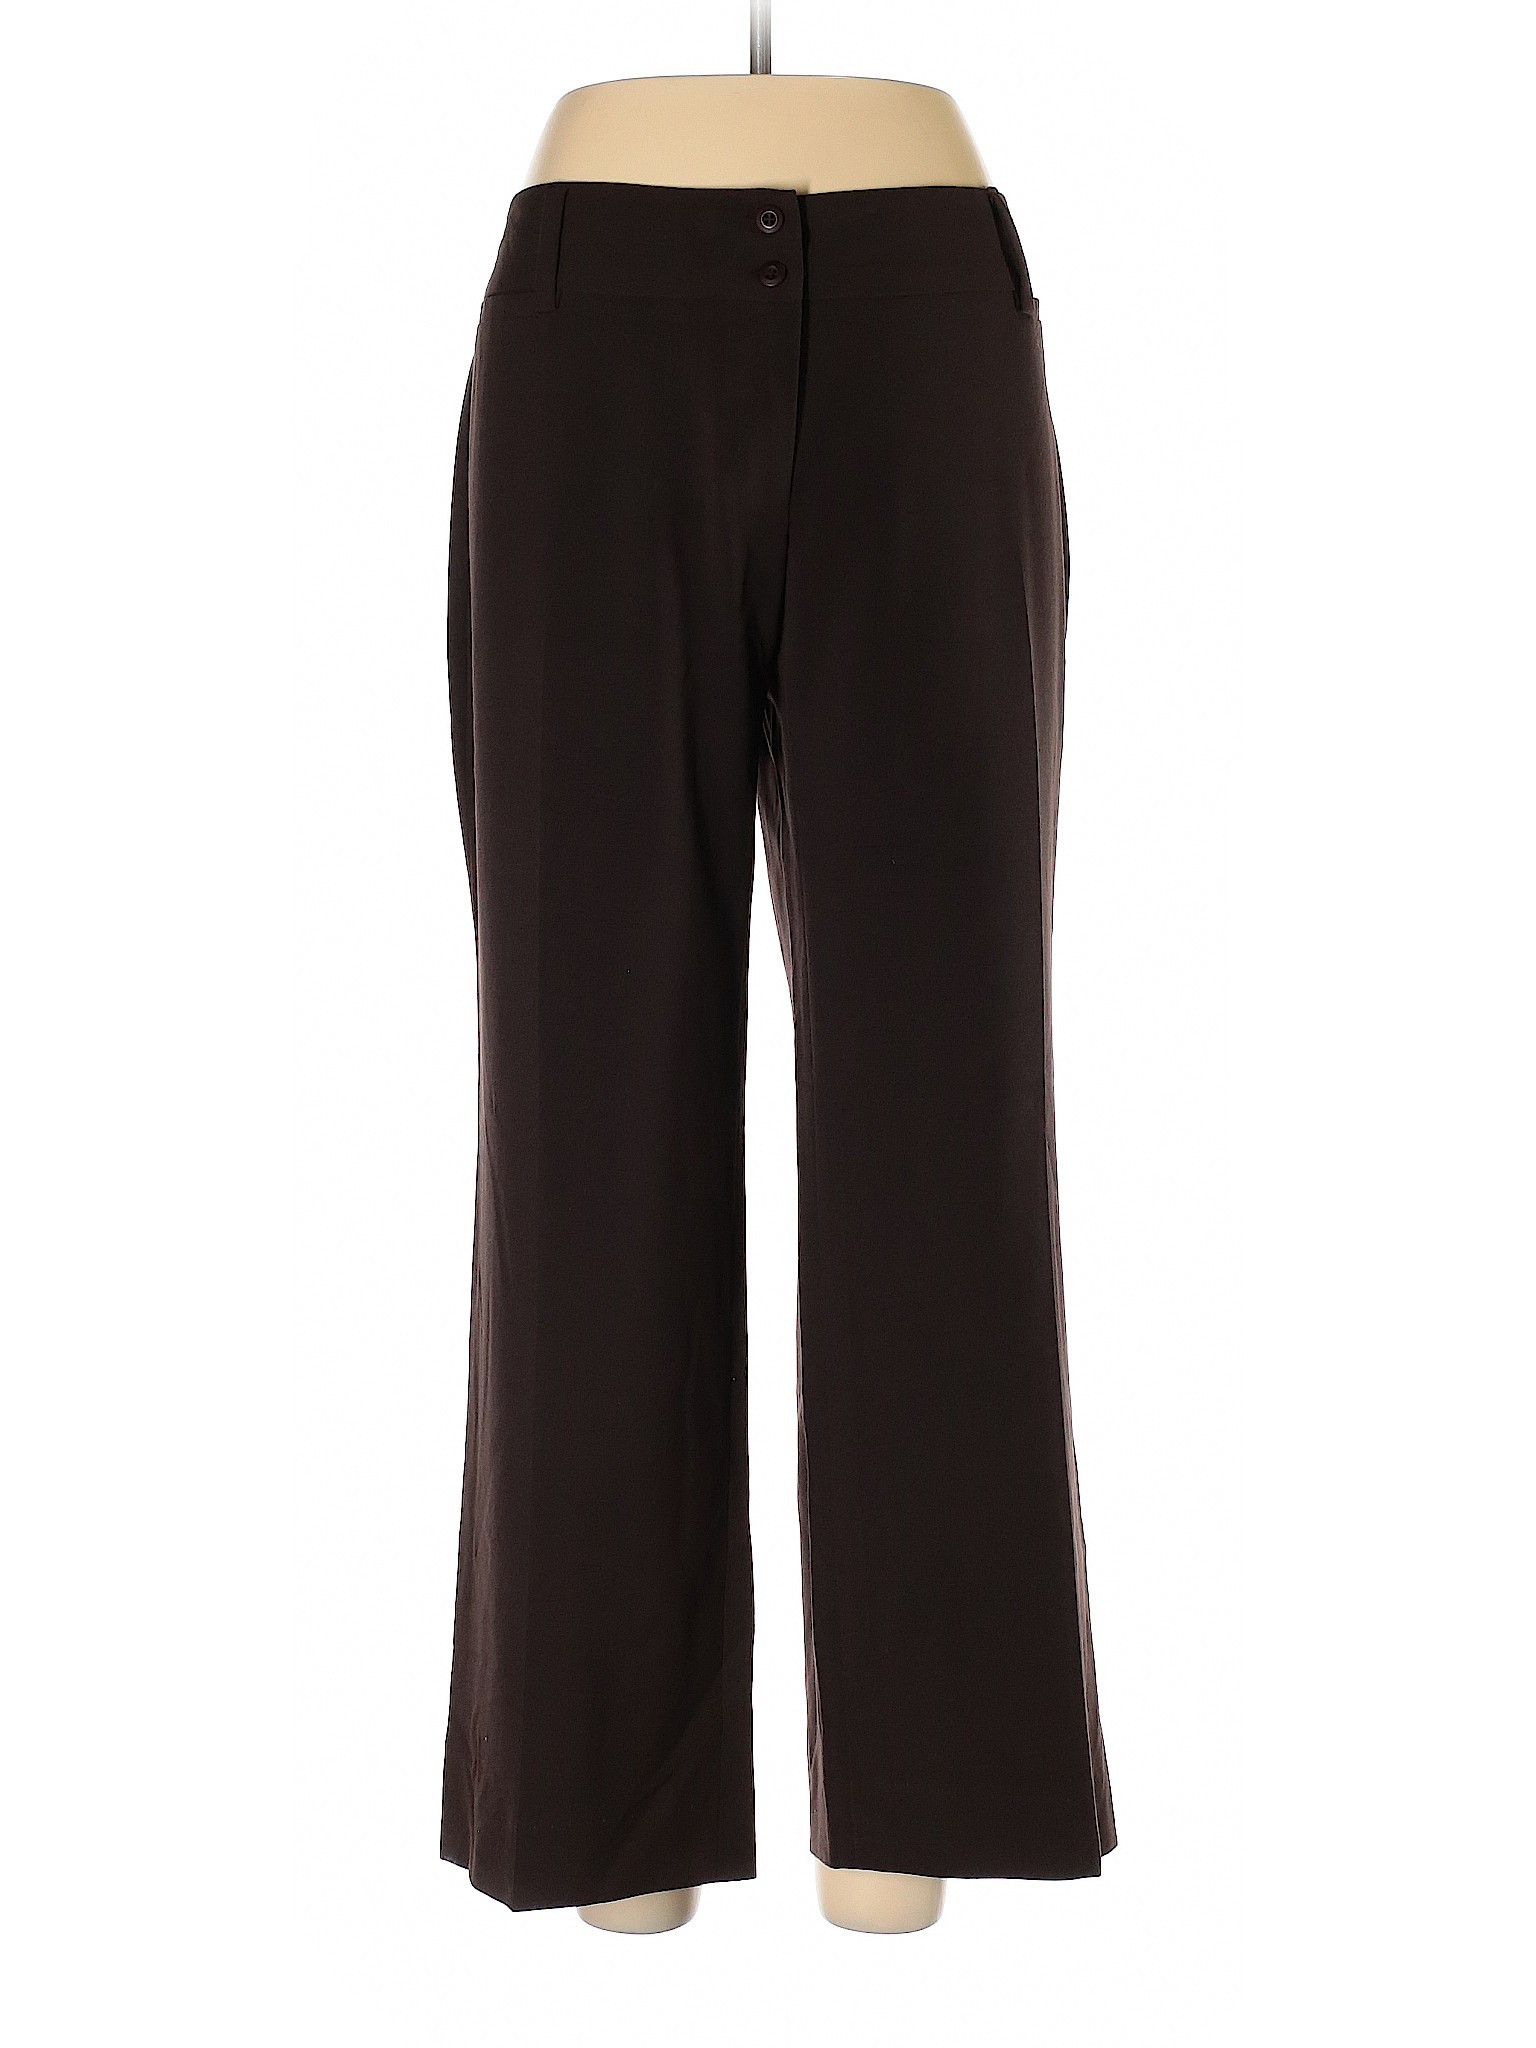 AB Studio Women Black Dress Pants 12 | eBay